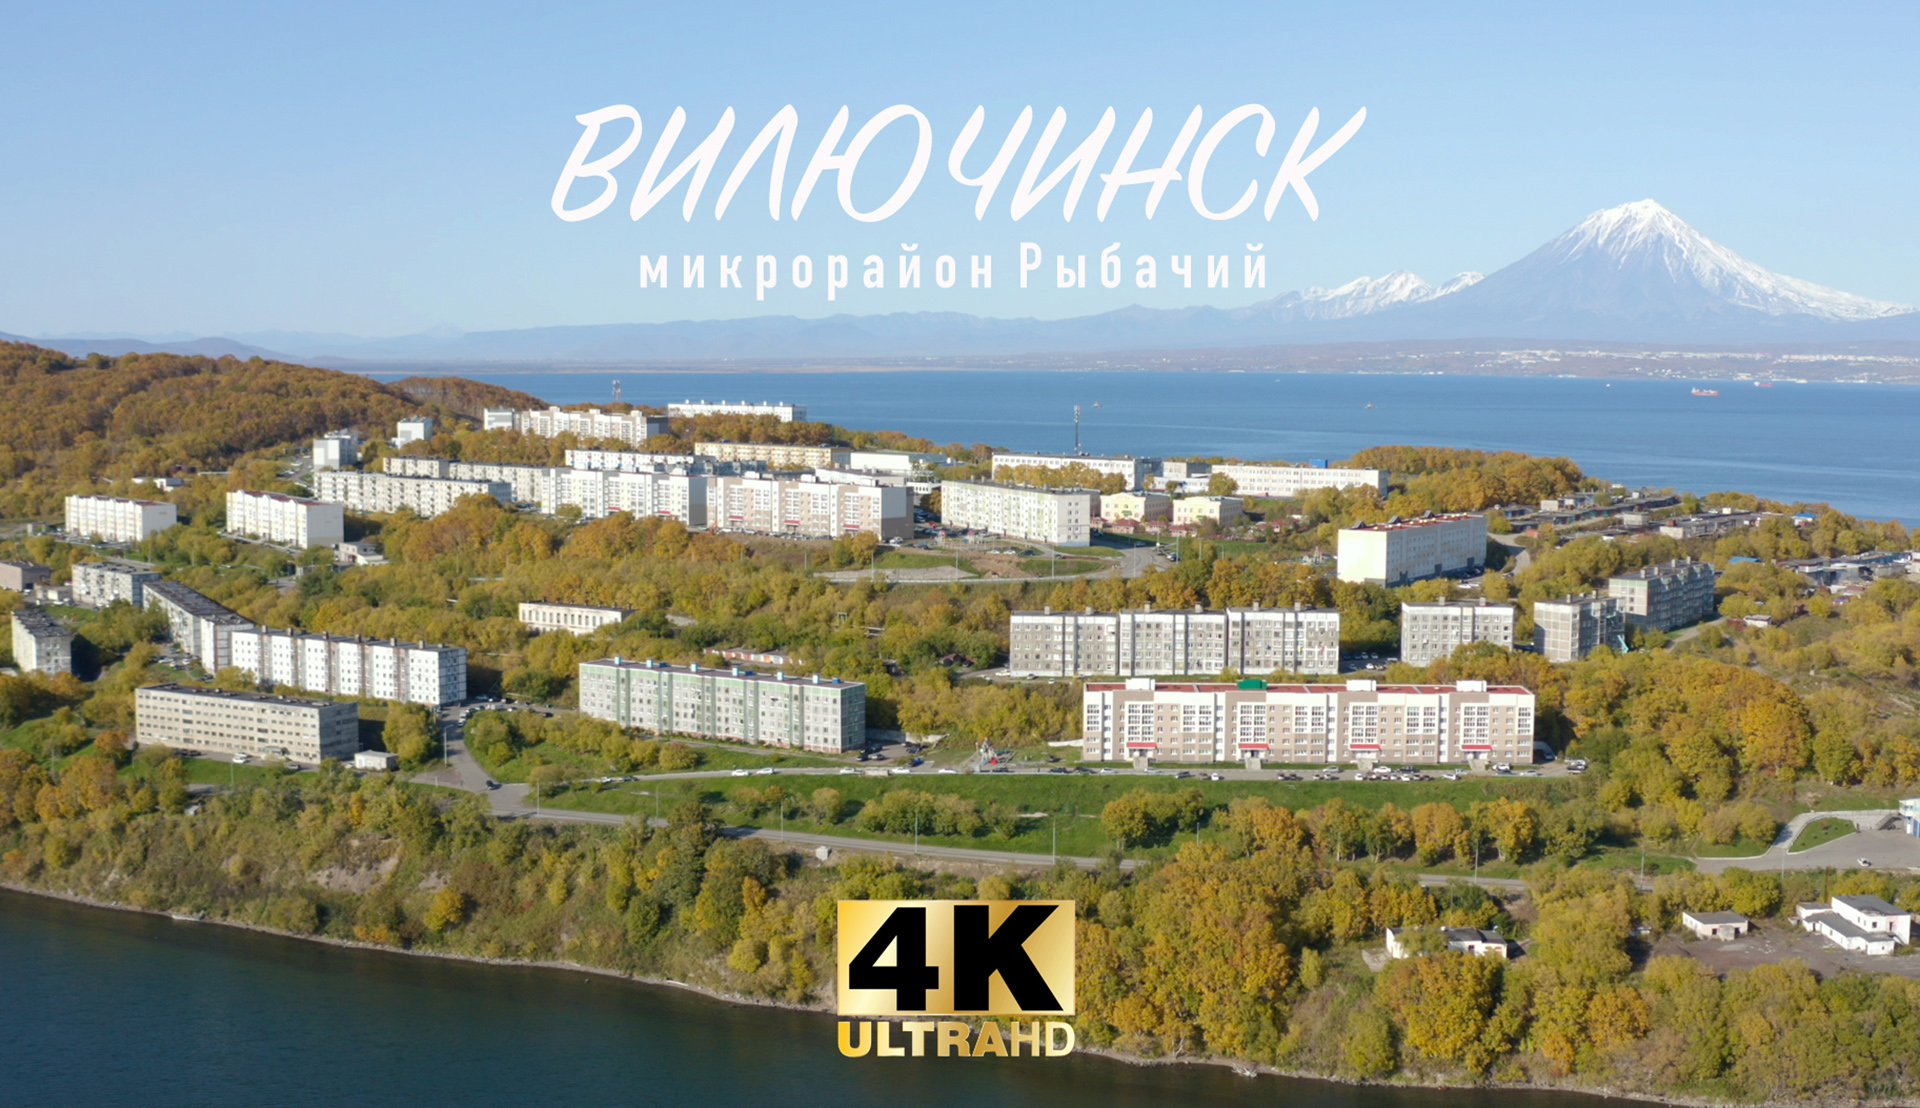 Вилючинск - Камчатка.
Микрорайон Рыбачий.